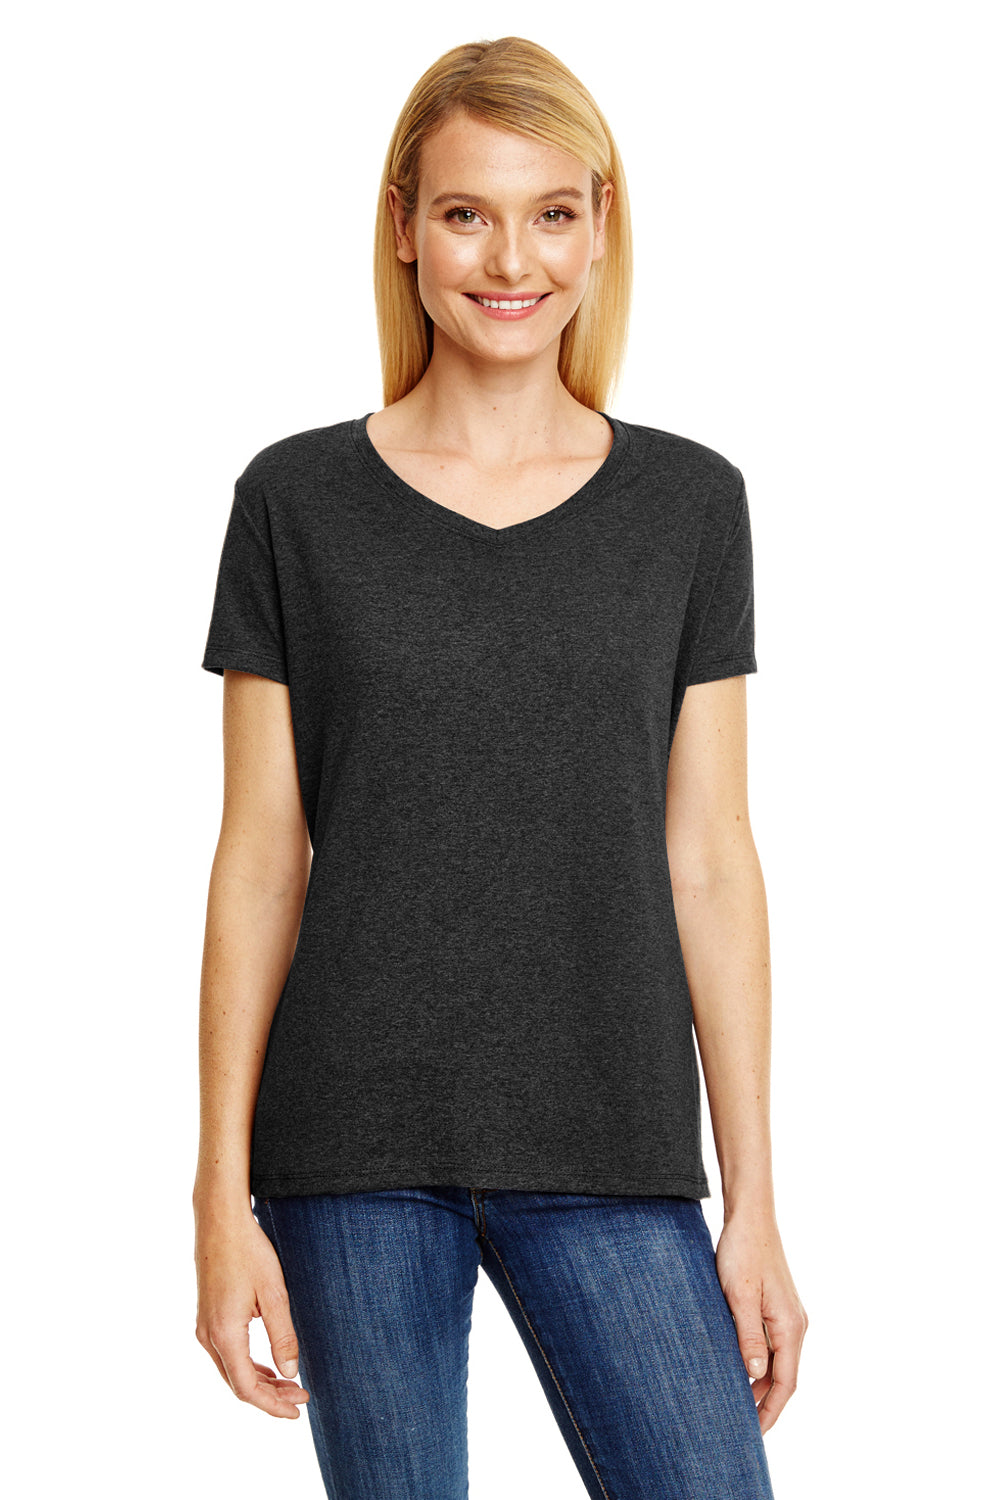 Hanes 42VT Womens Solid Black X-Temp FreshIQ Moisture Wicking Short Sleeve  V-Neck T-Shirt — BigTopShirtShop.com